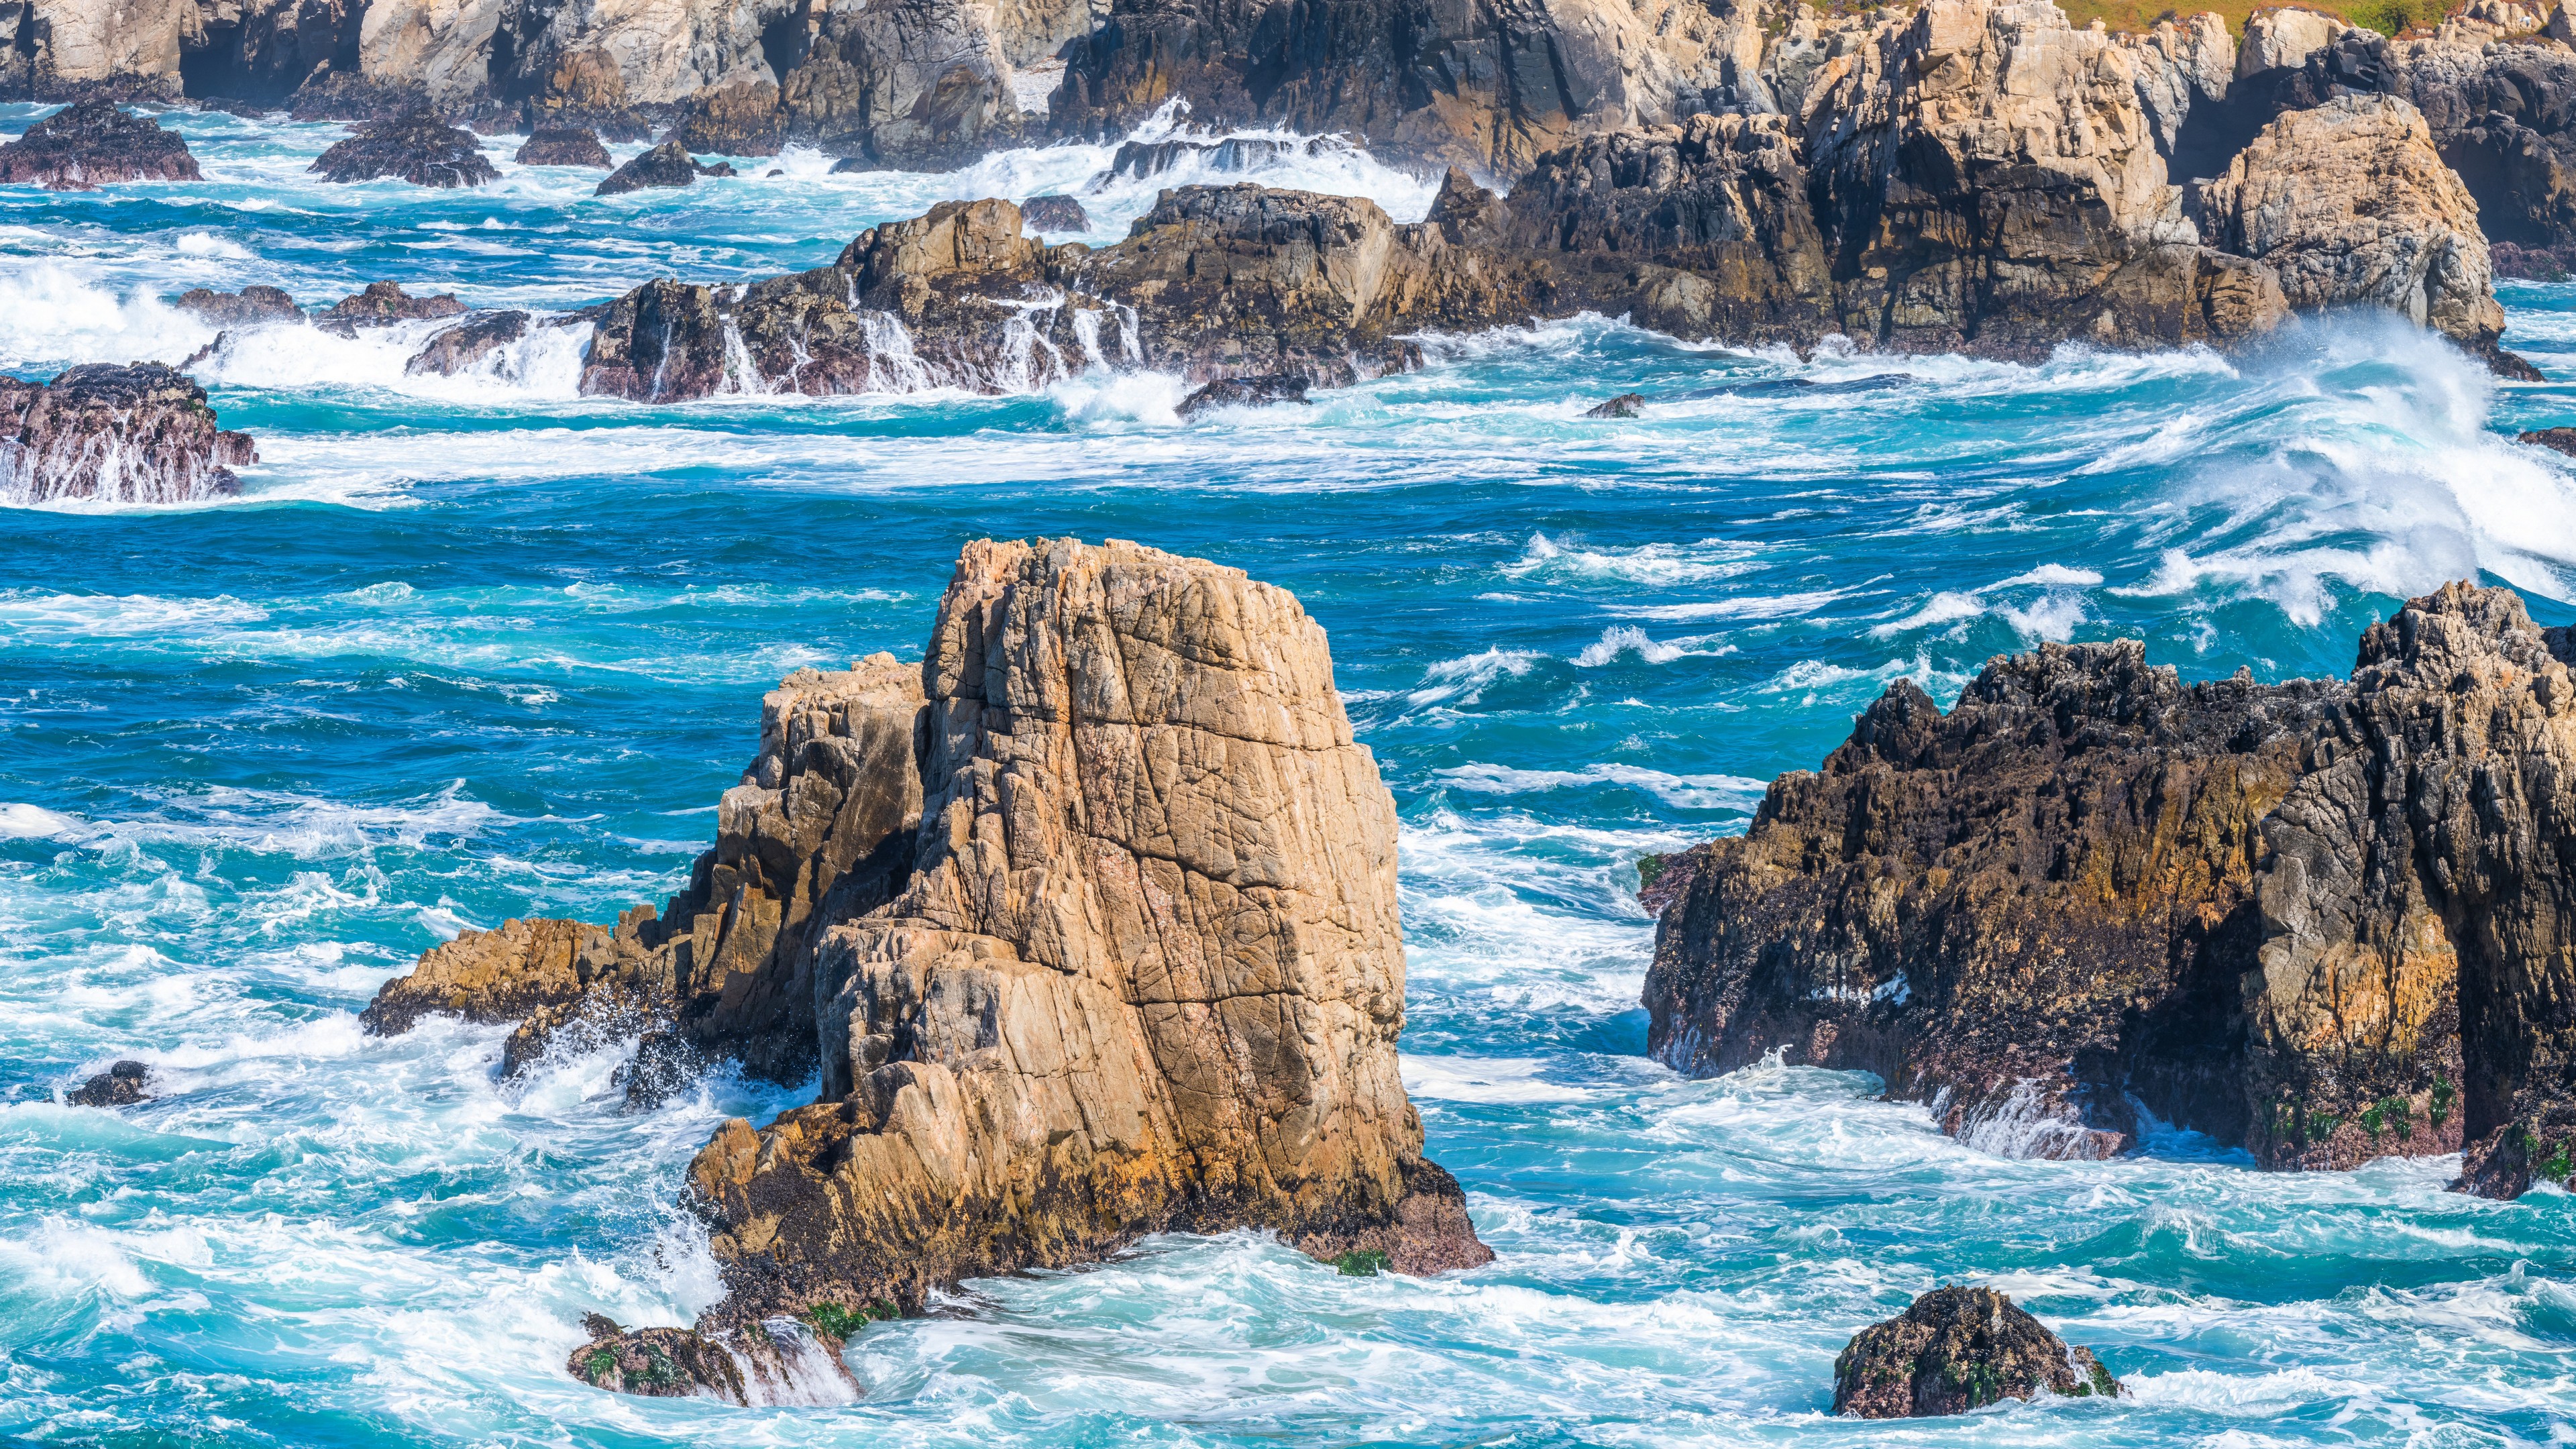 General 3840x2160 USA California coast sea waves rocks nature landscape water